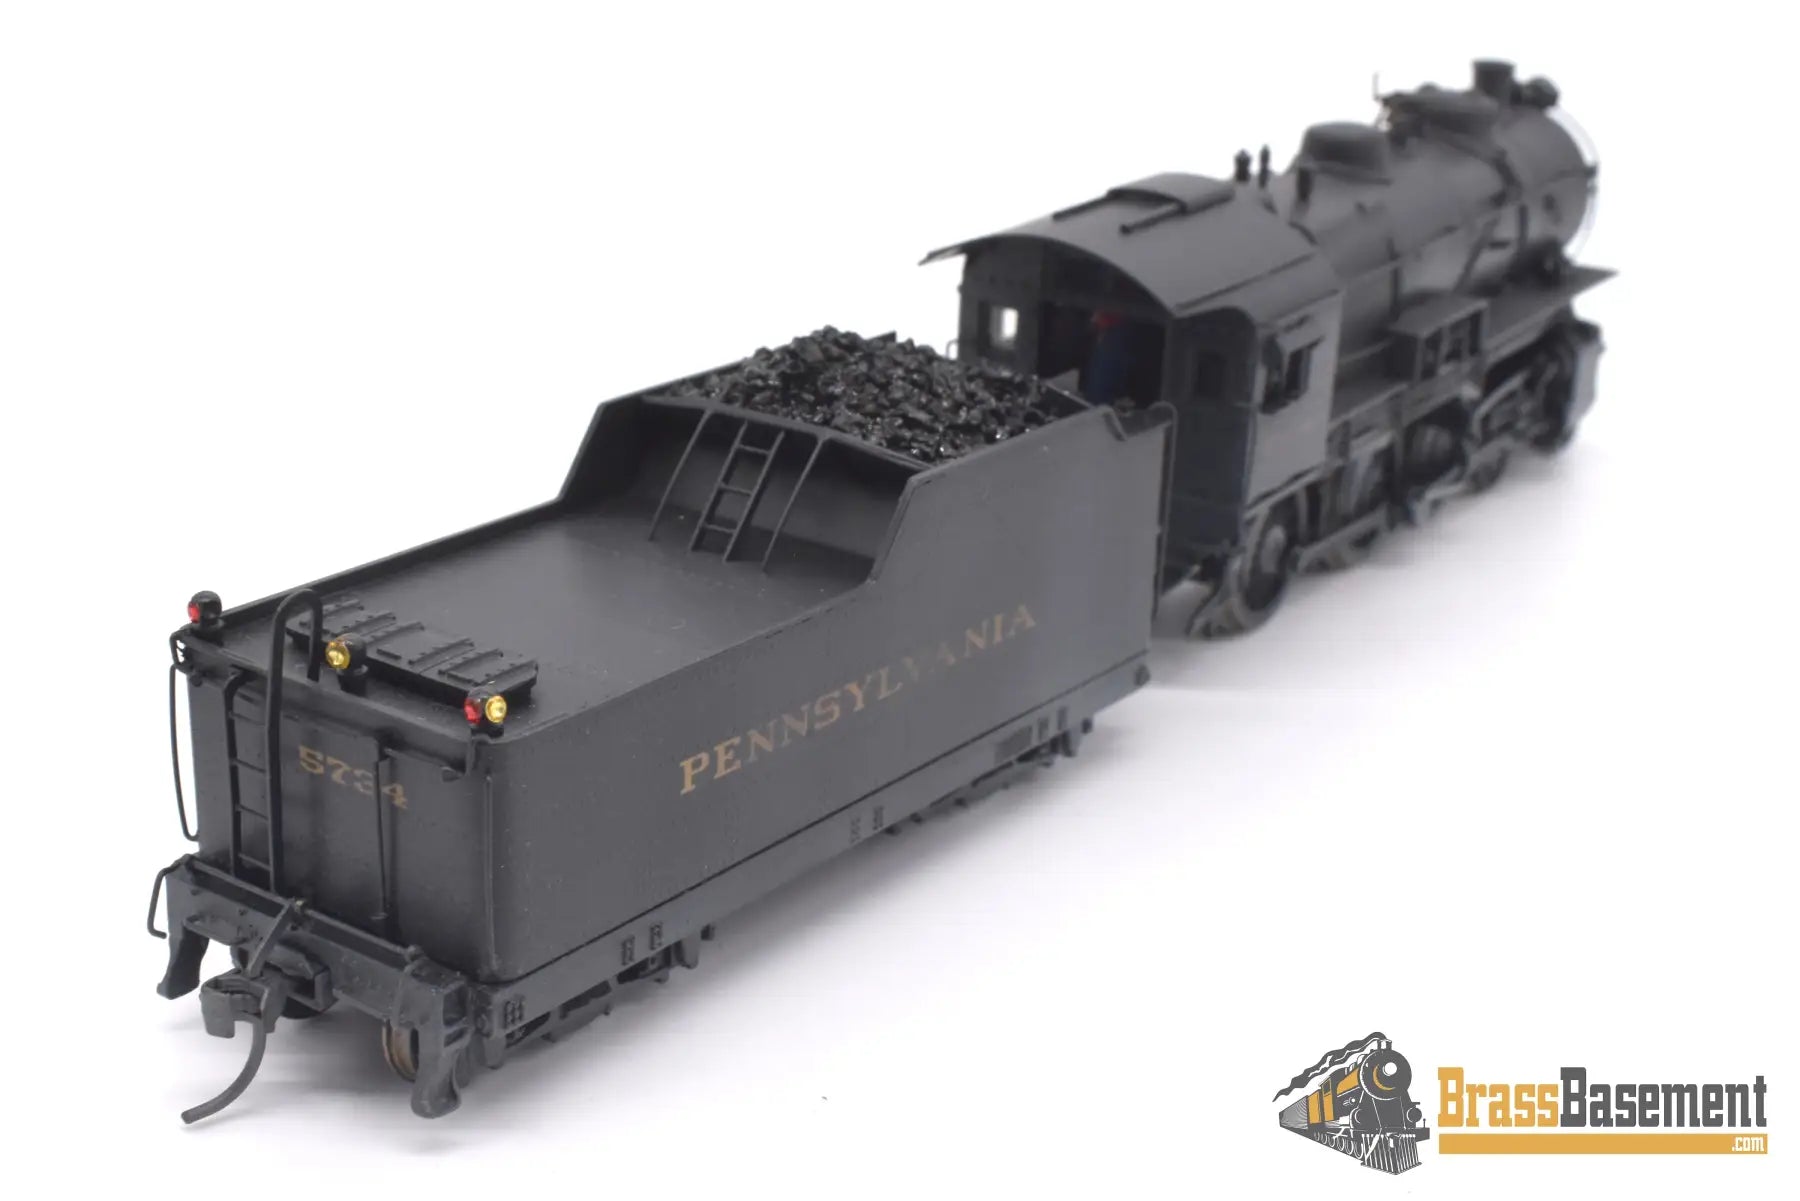 Ho Brass - Gem Olympia Gn - 119 Pennsylvania Railroad 4 - 6 - 0 G5S Nice Paint Steam